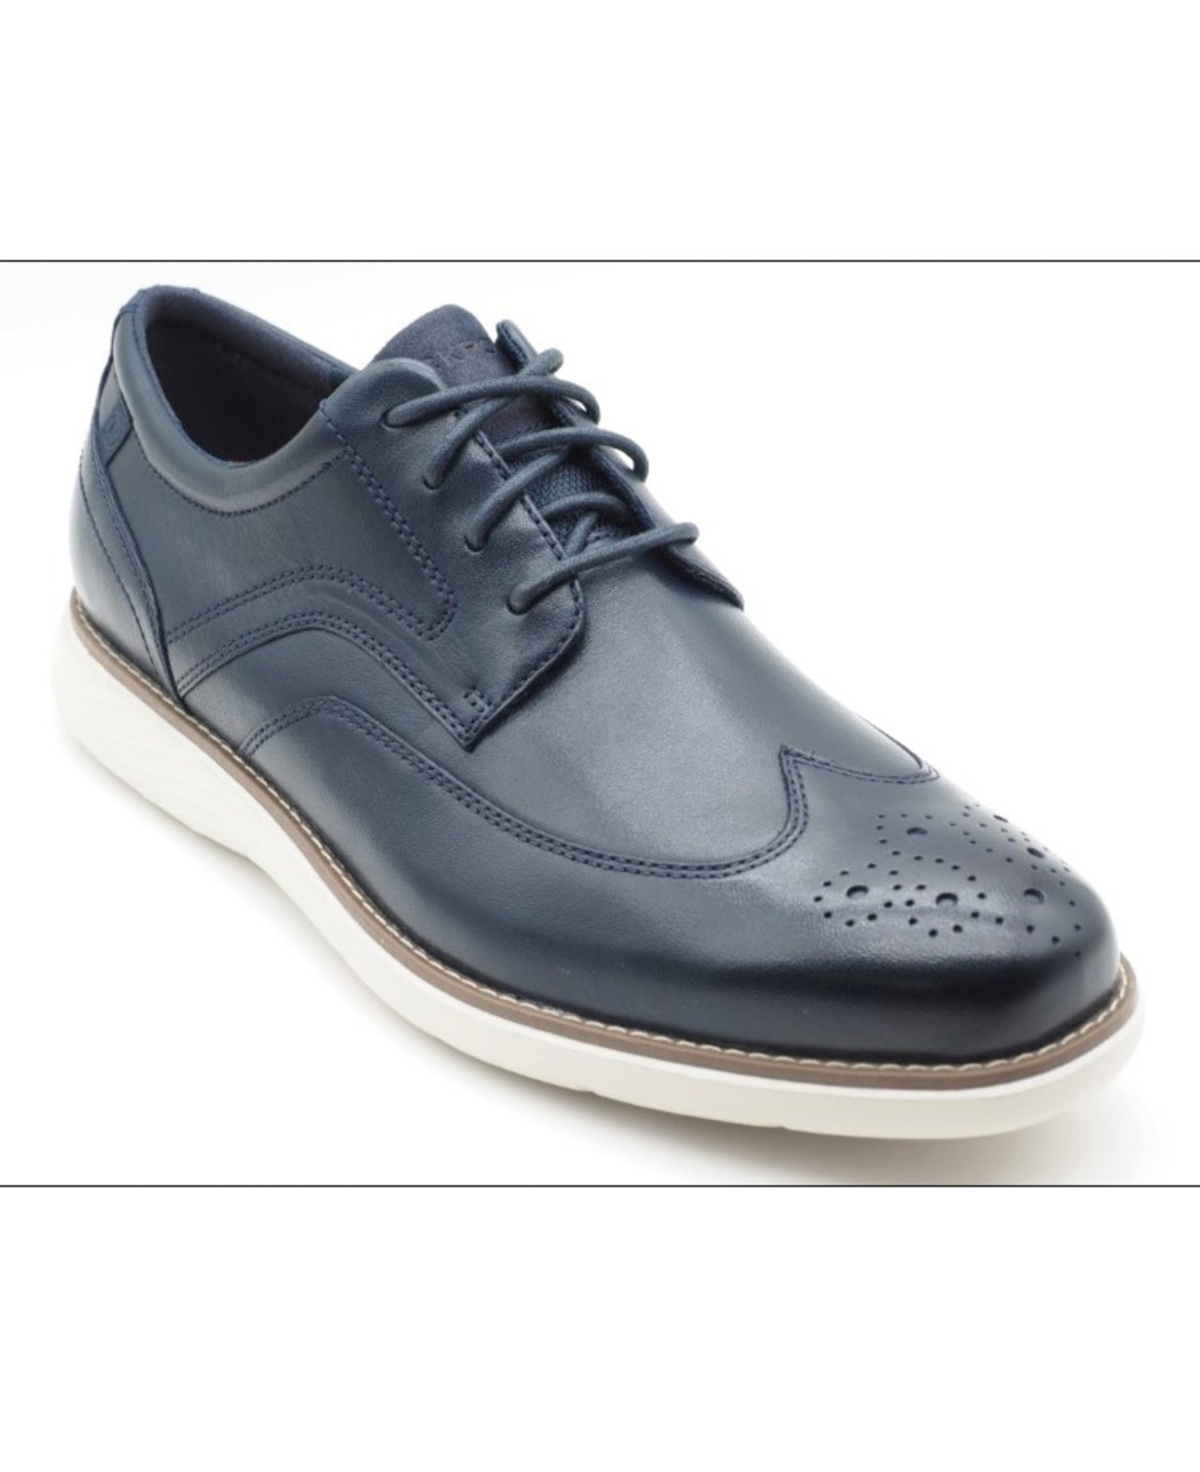 Men's Garett Wing Tip Comfort Shoes - Blue